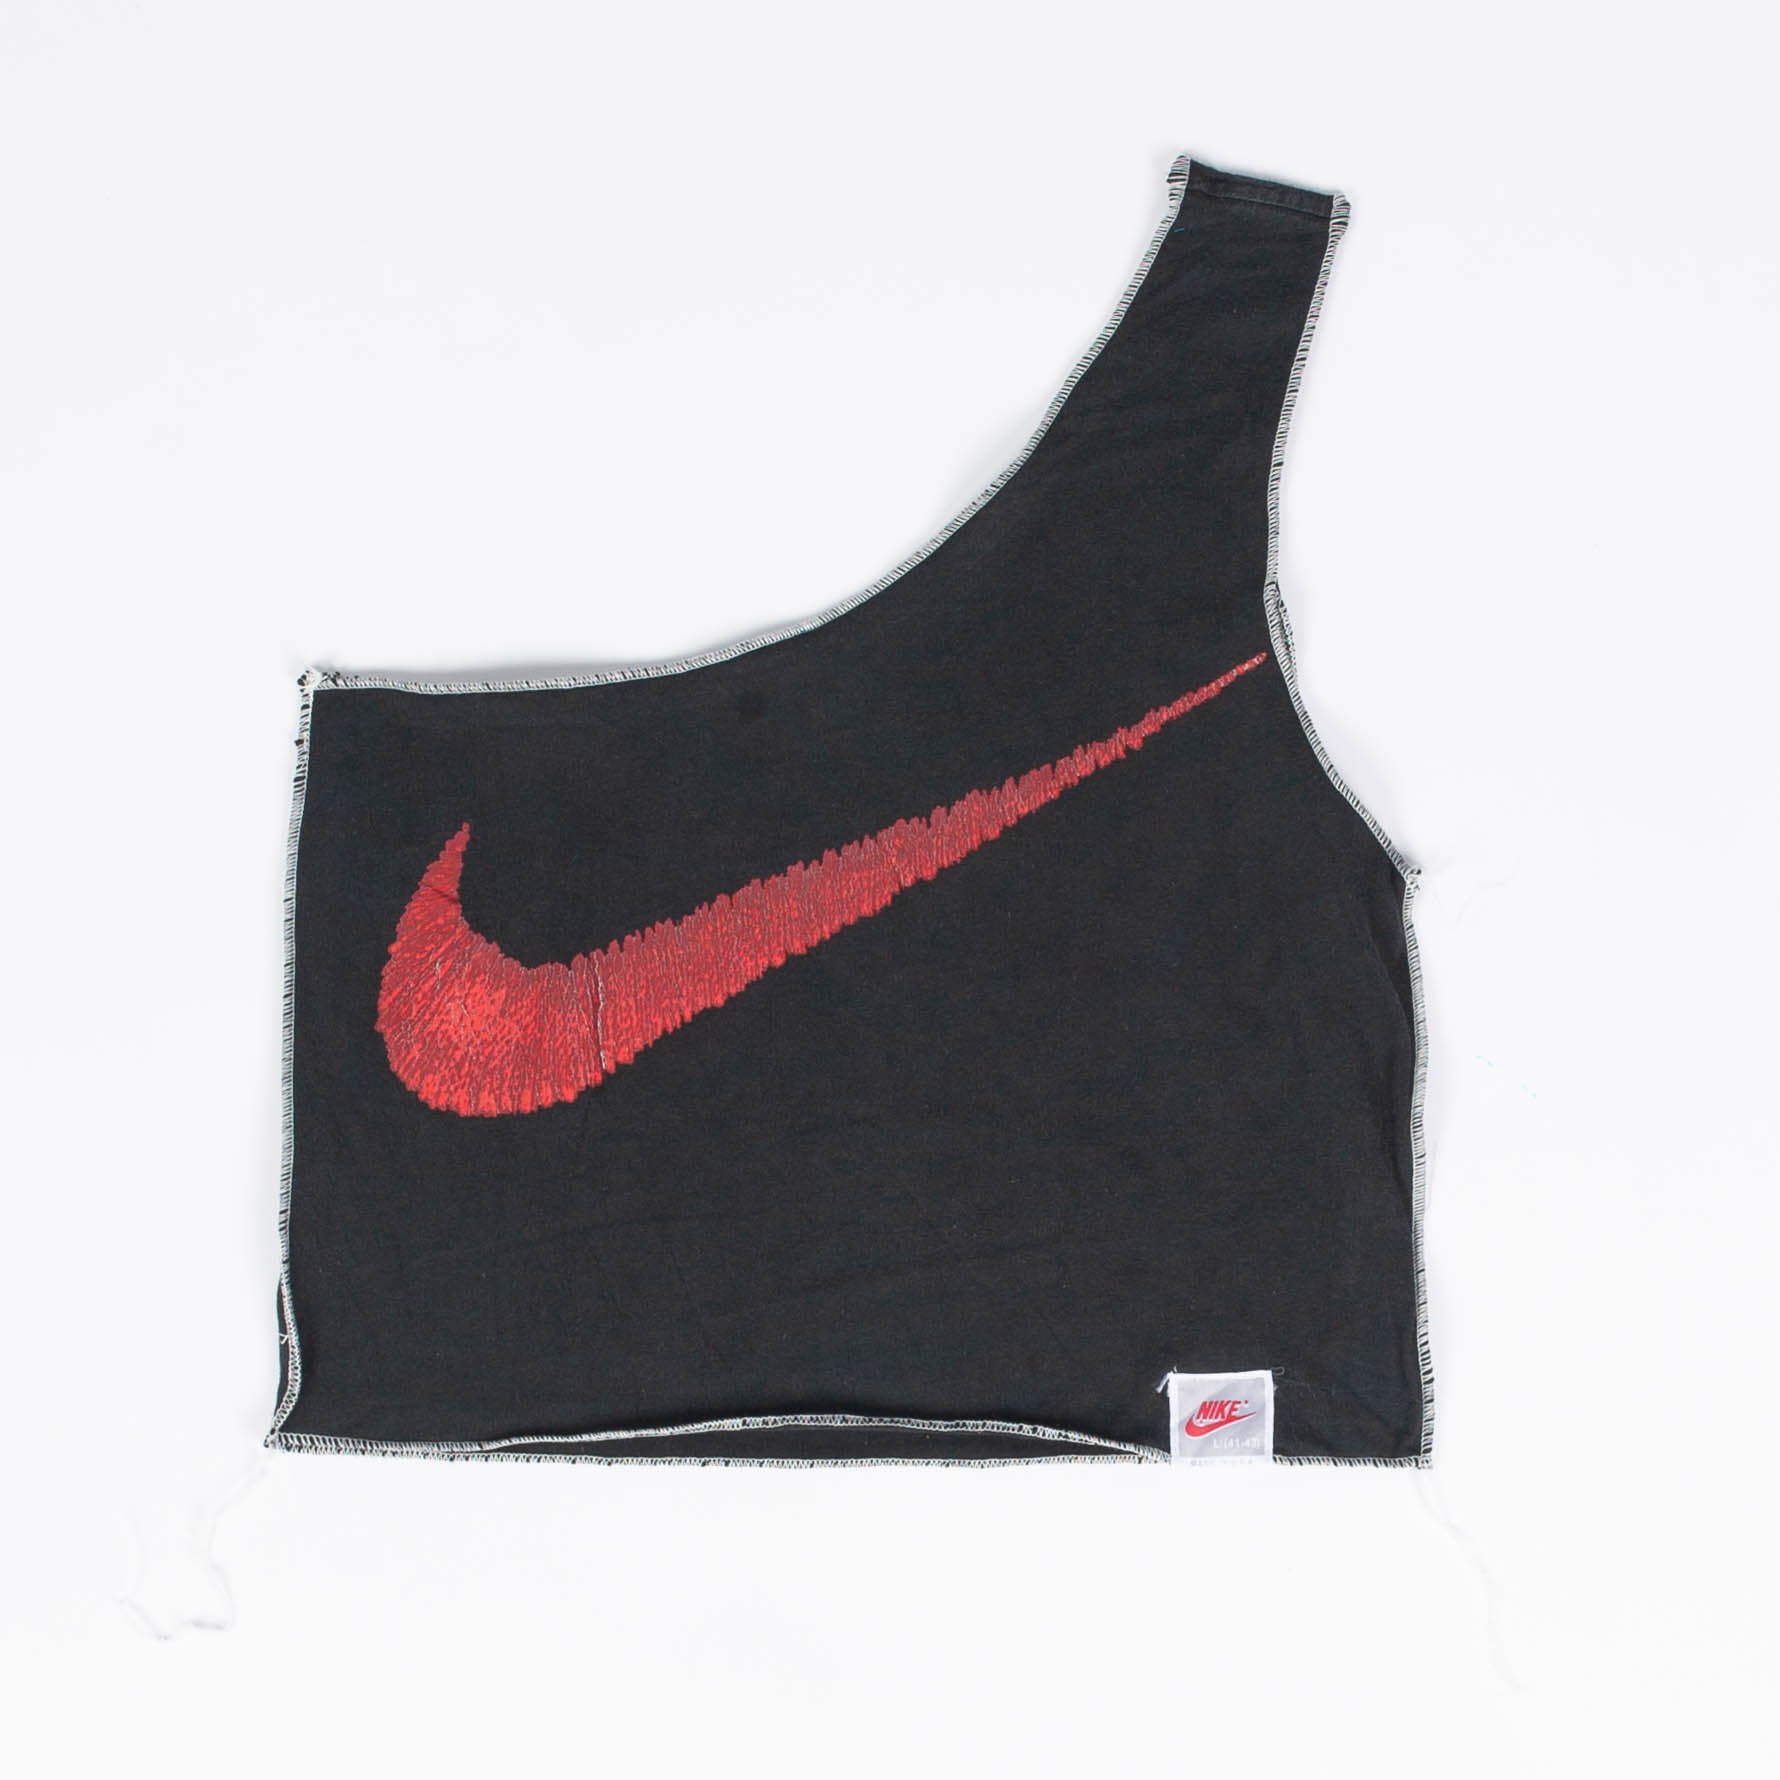 DCNSTRCTD Black Nike Crop Top Size M